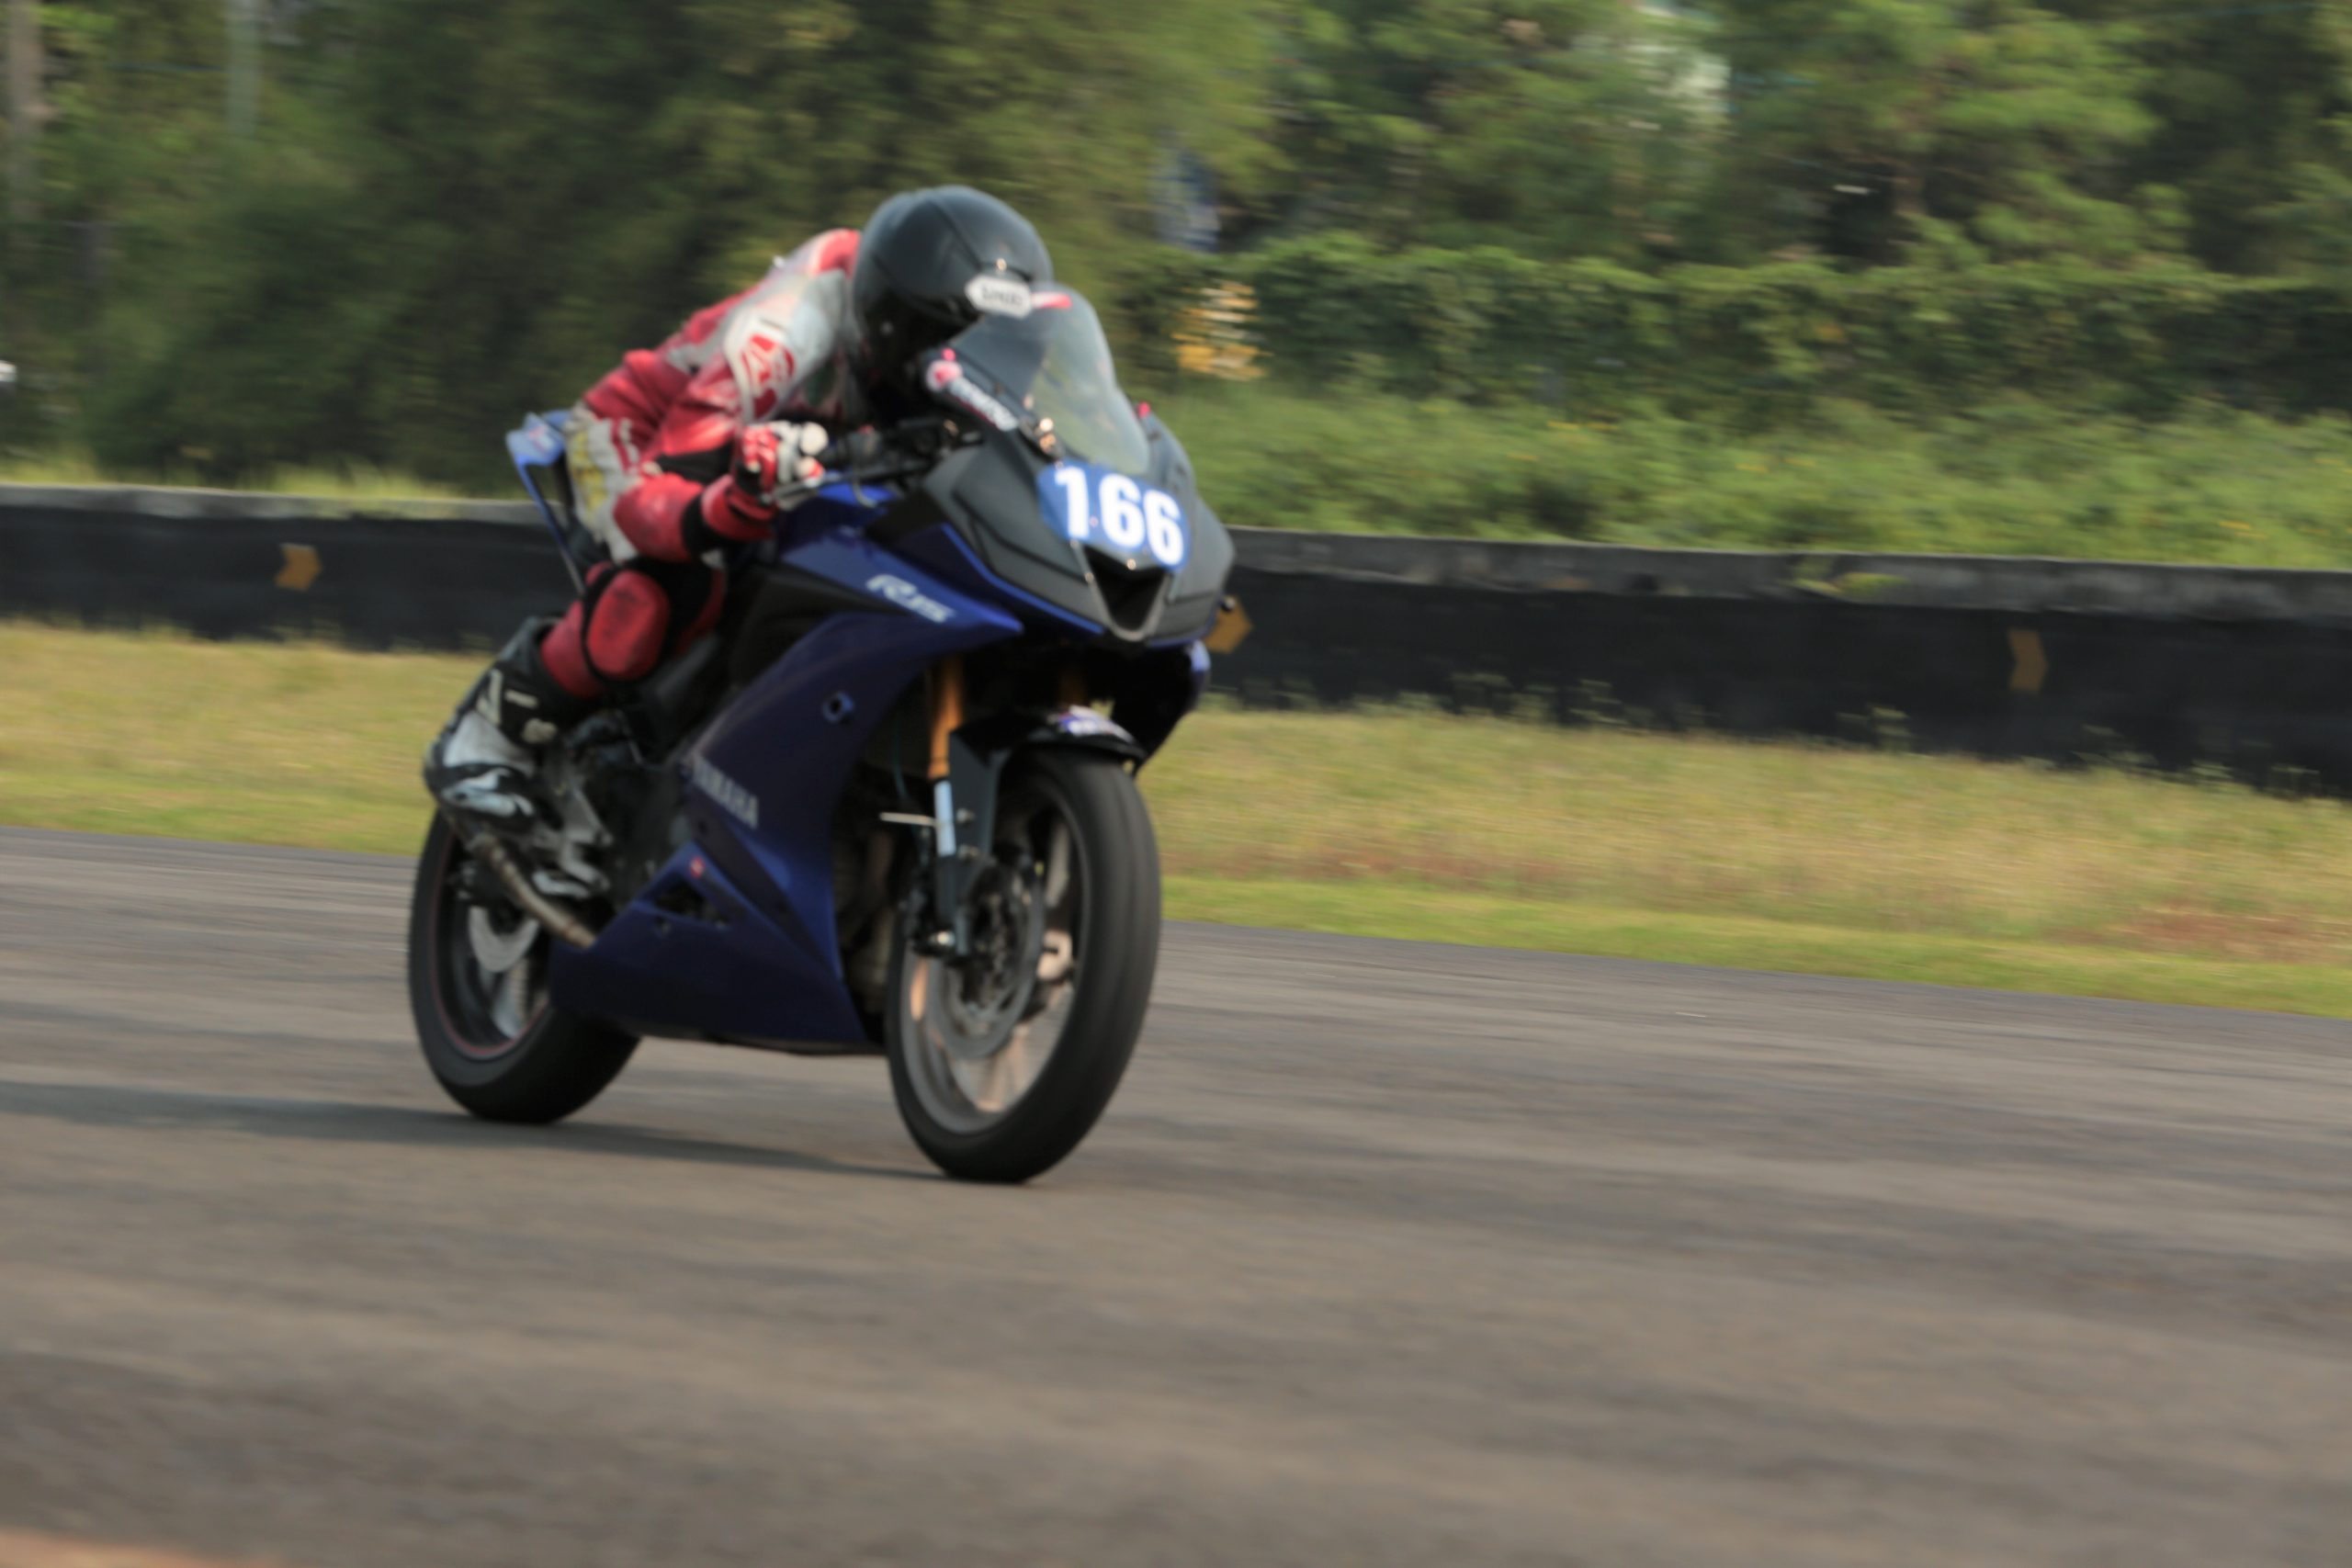 Lihai Riding Motor Sport Fairing di Sirkuit, Simak Tips dari Pembalap Yamaha Racing Indonesia